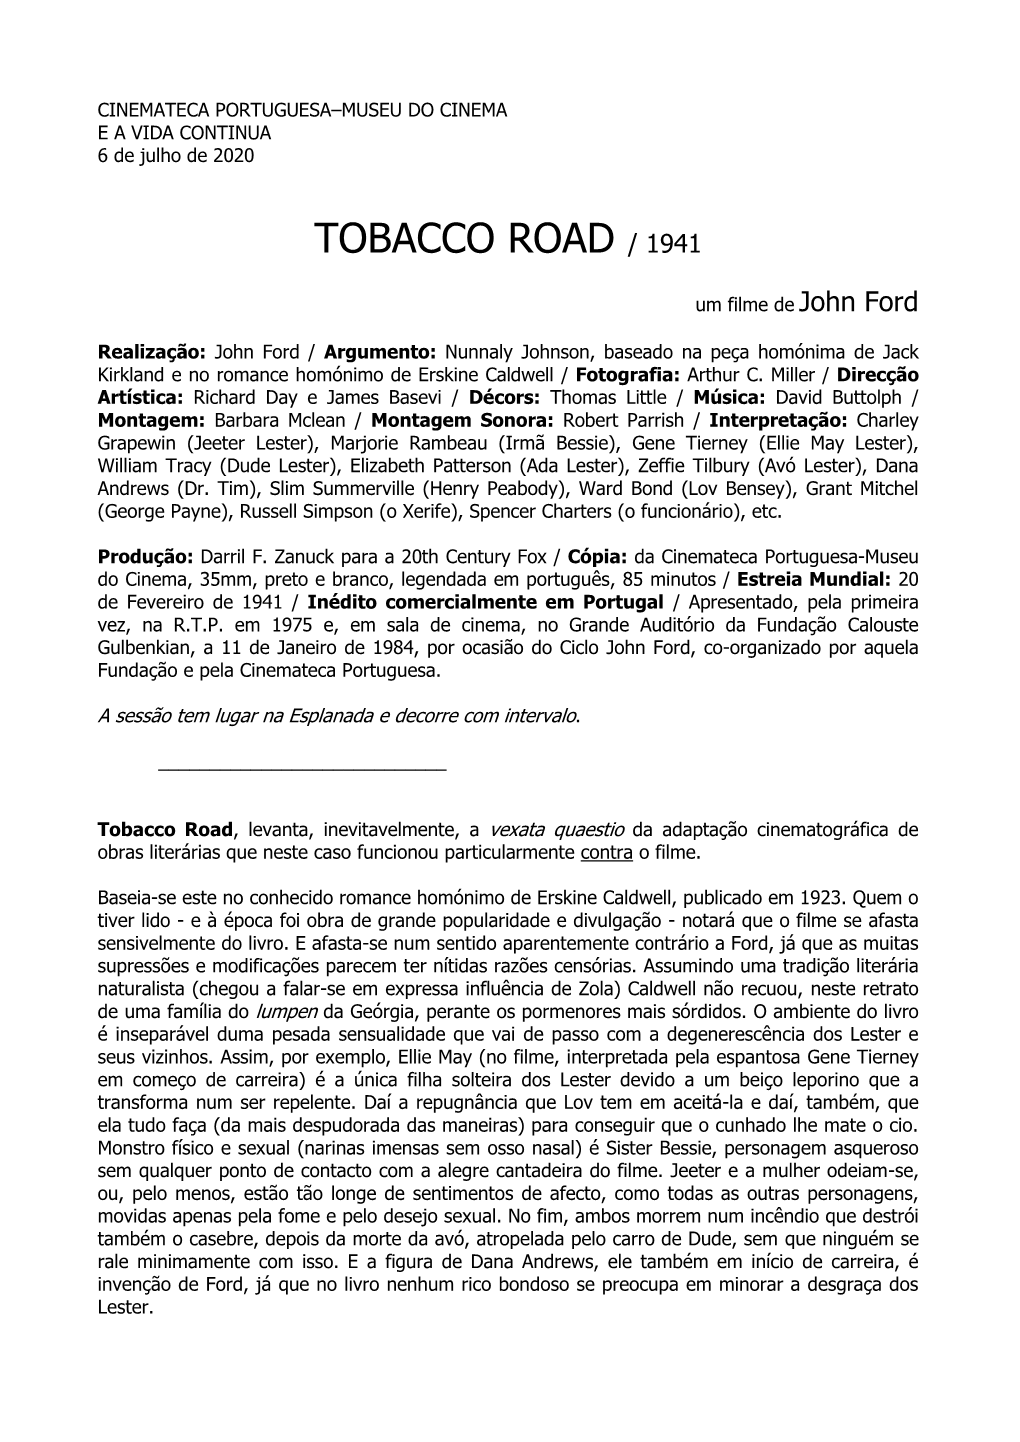 Tobacco Road / 1941